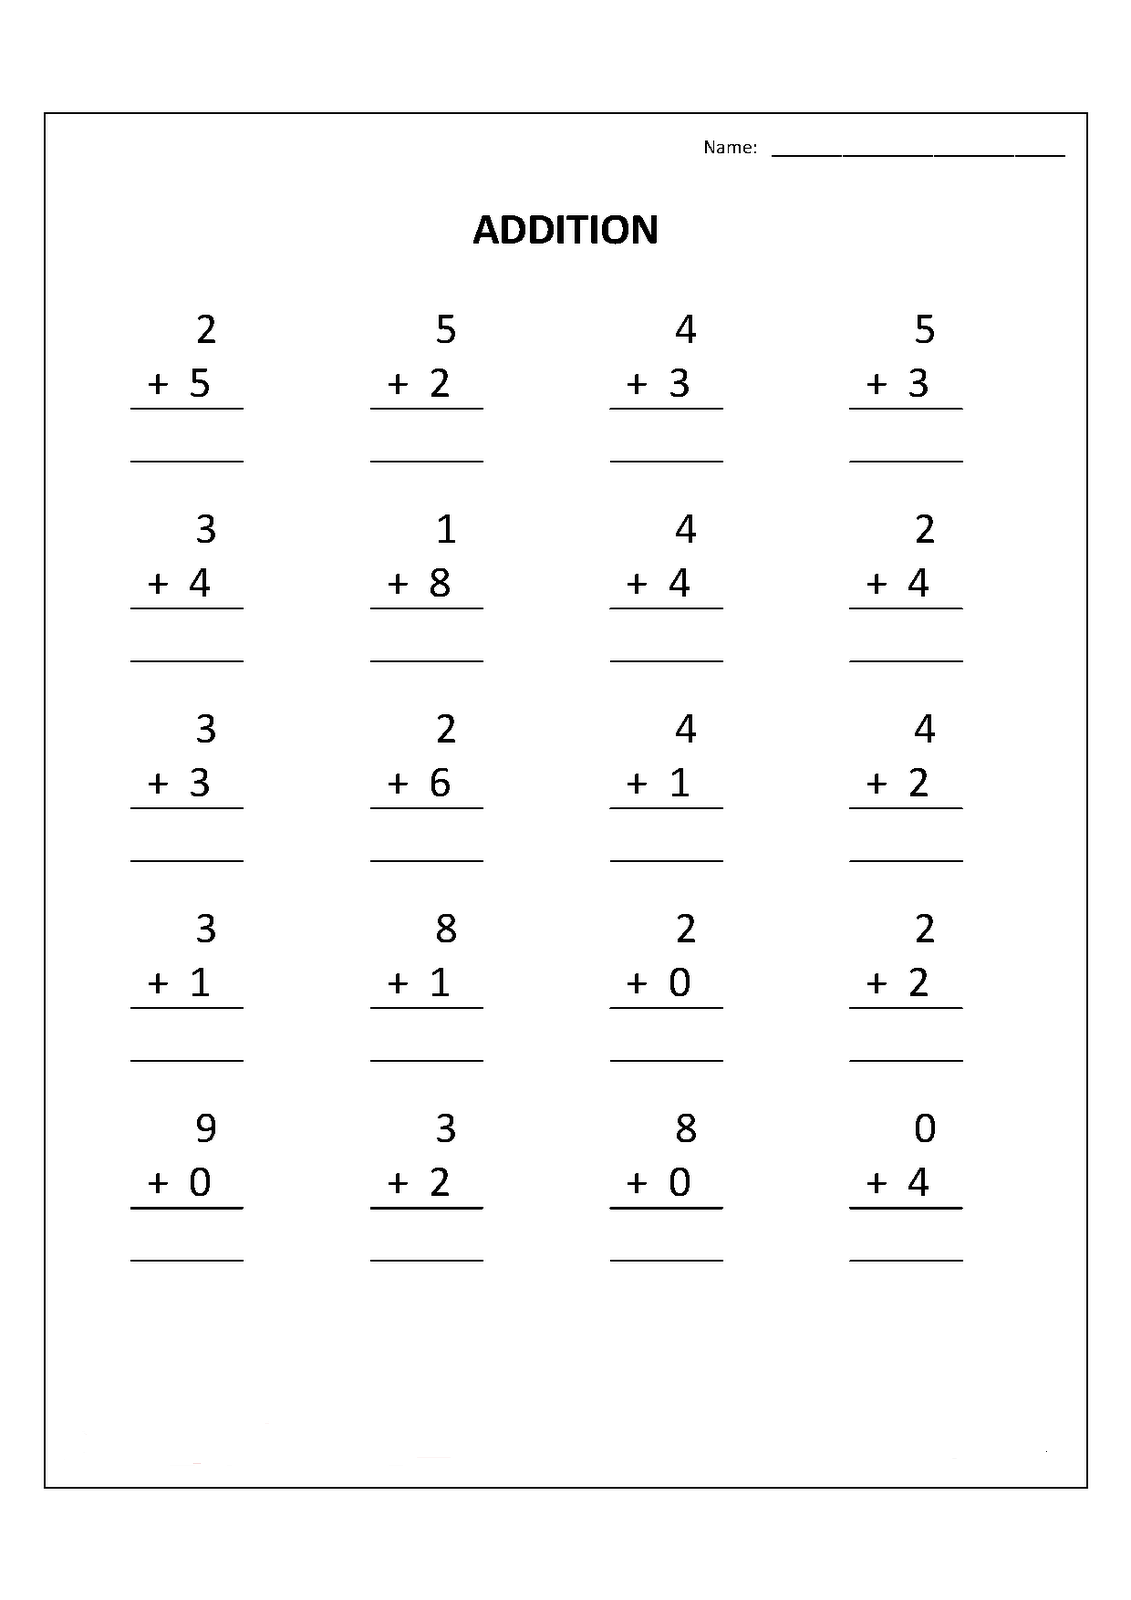 kindergarten-addition-and-subtraction-worksheets-kindermommacom-free-addition-and-subtraction